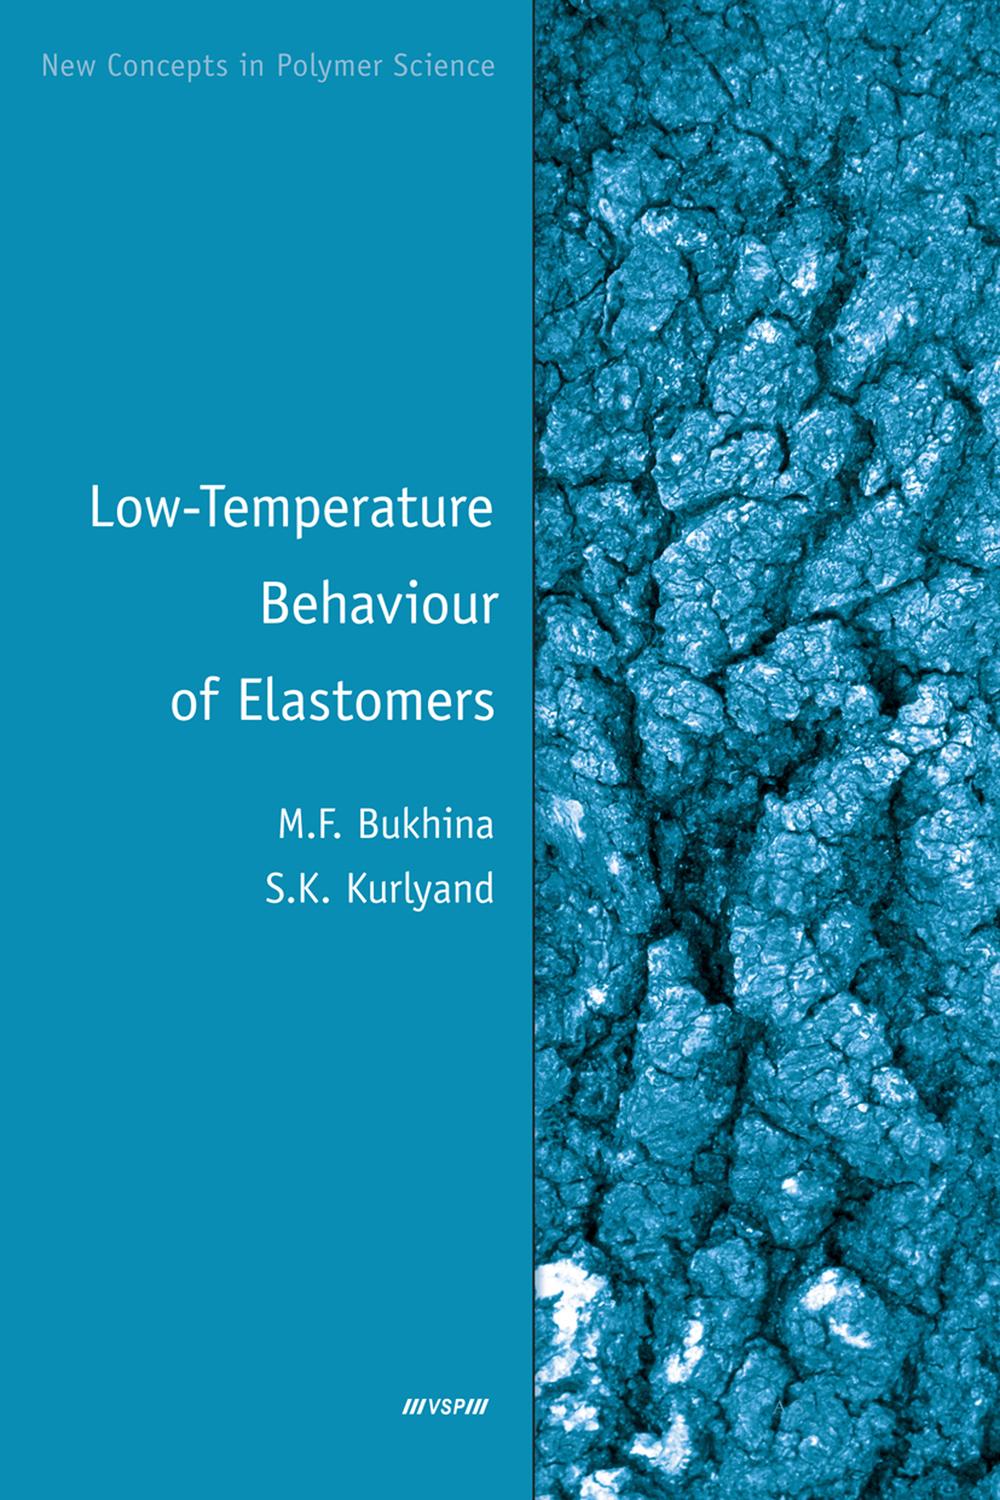 Low-Temperature Behaviour of Elastomers - Bukhina, Kurlyand,,